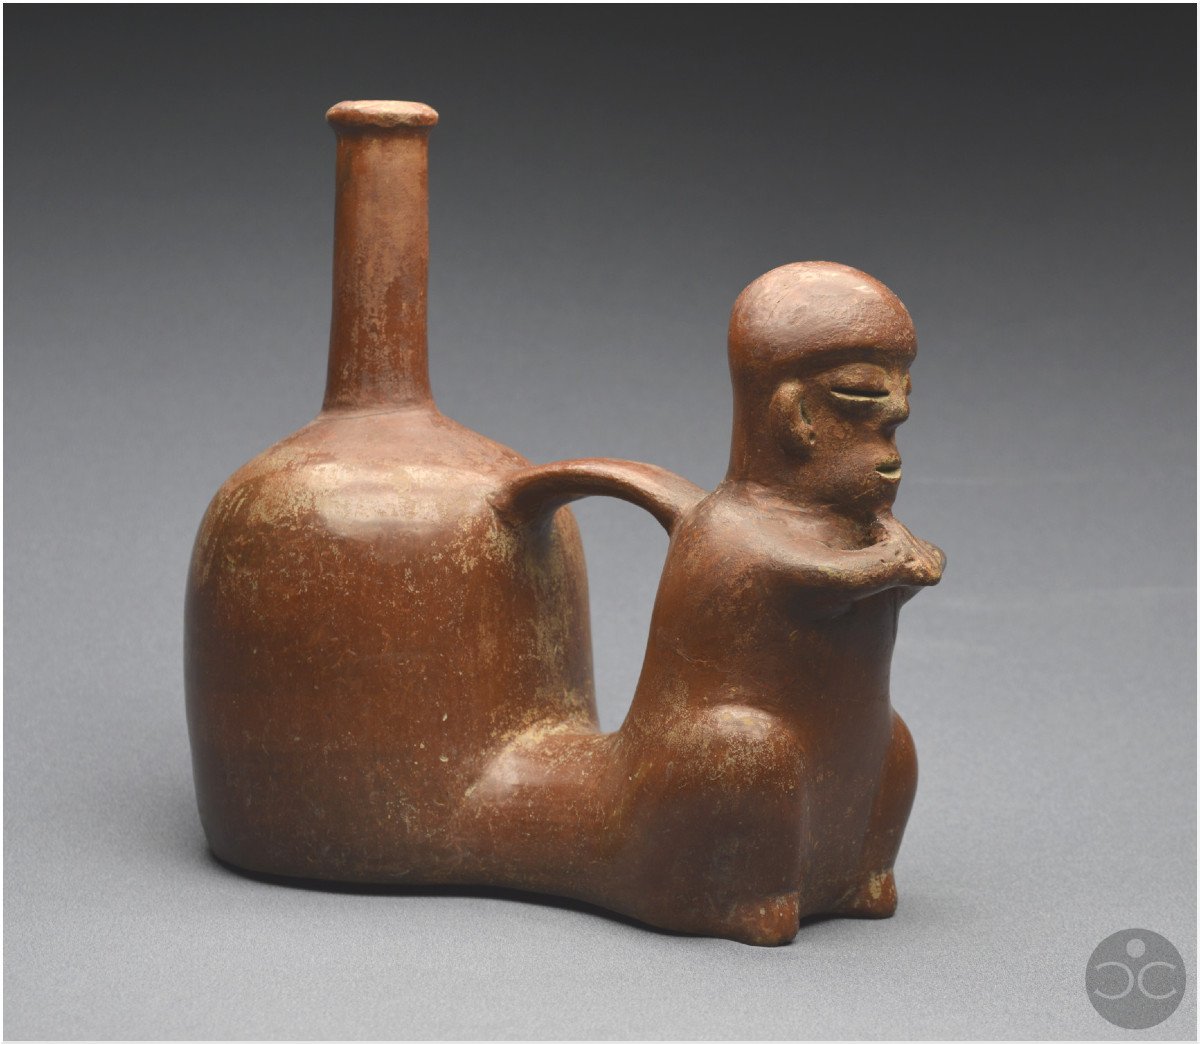 Équateur, 1000 - 500 av J.-C, Culture Chorrera, Vase rituel anthropomorphe, Céramique vernissée-photo-2